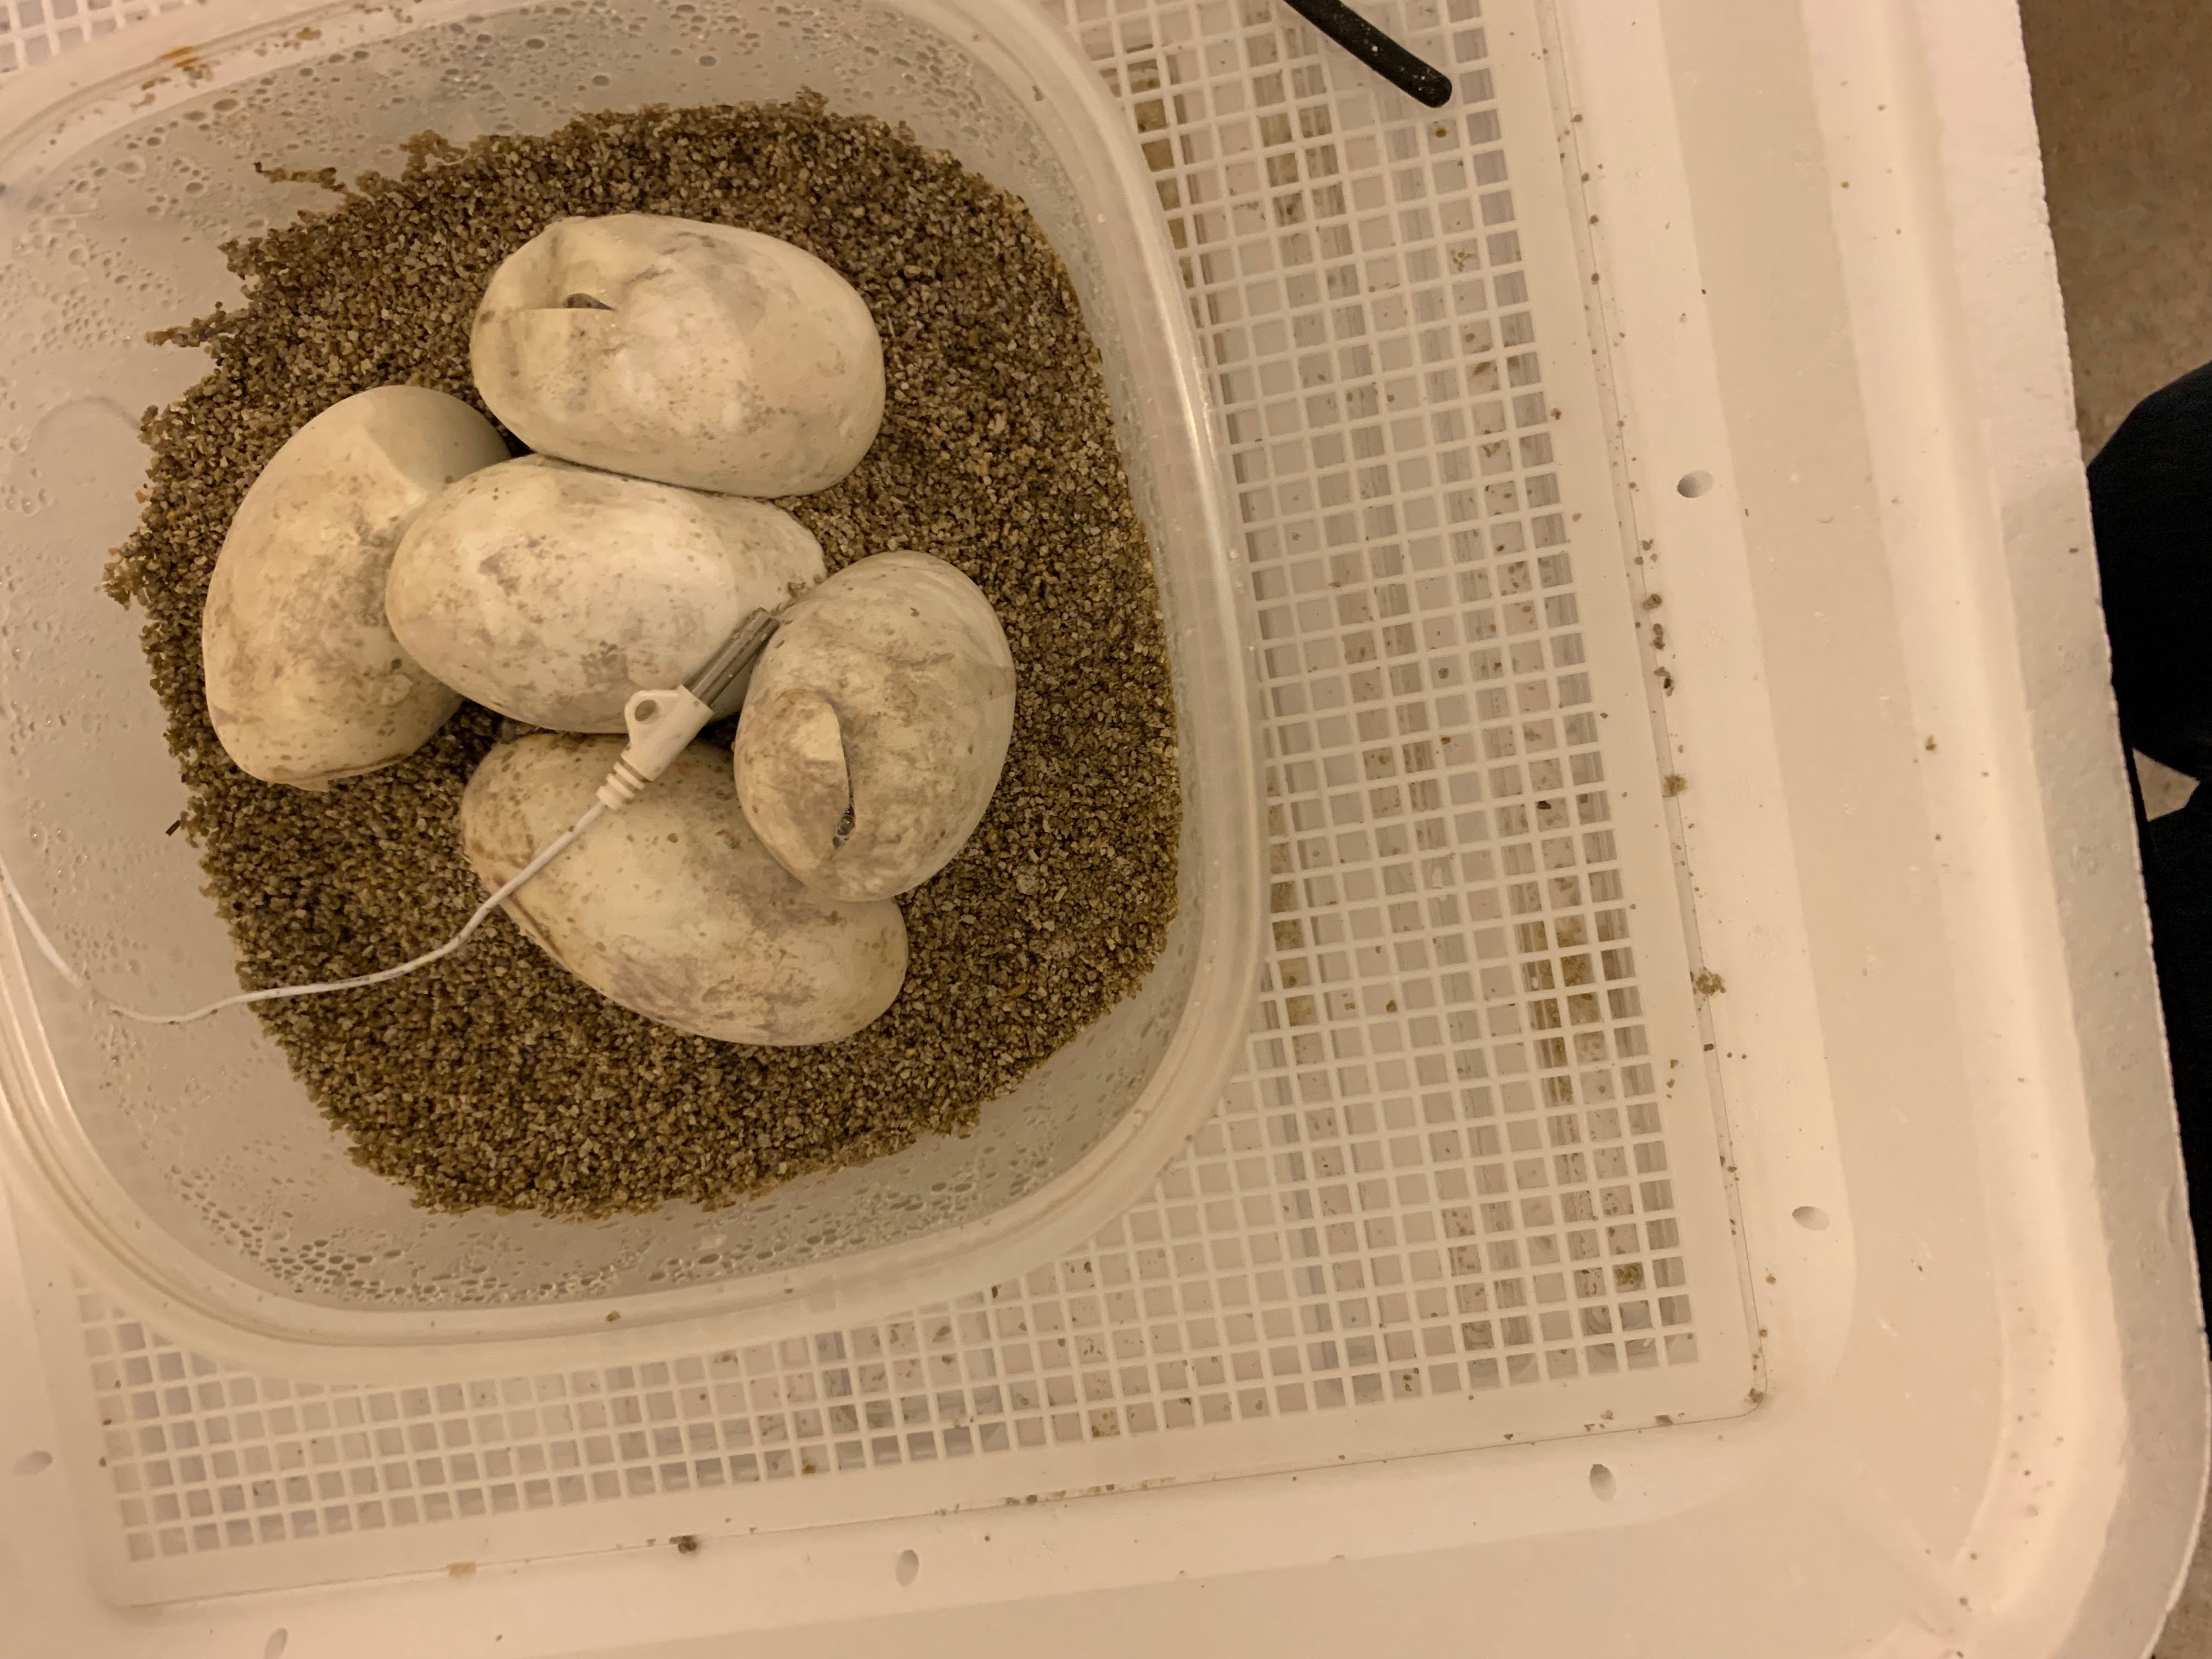 Ball Python Eggs starting to crack open